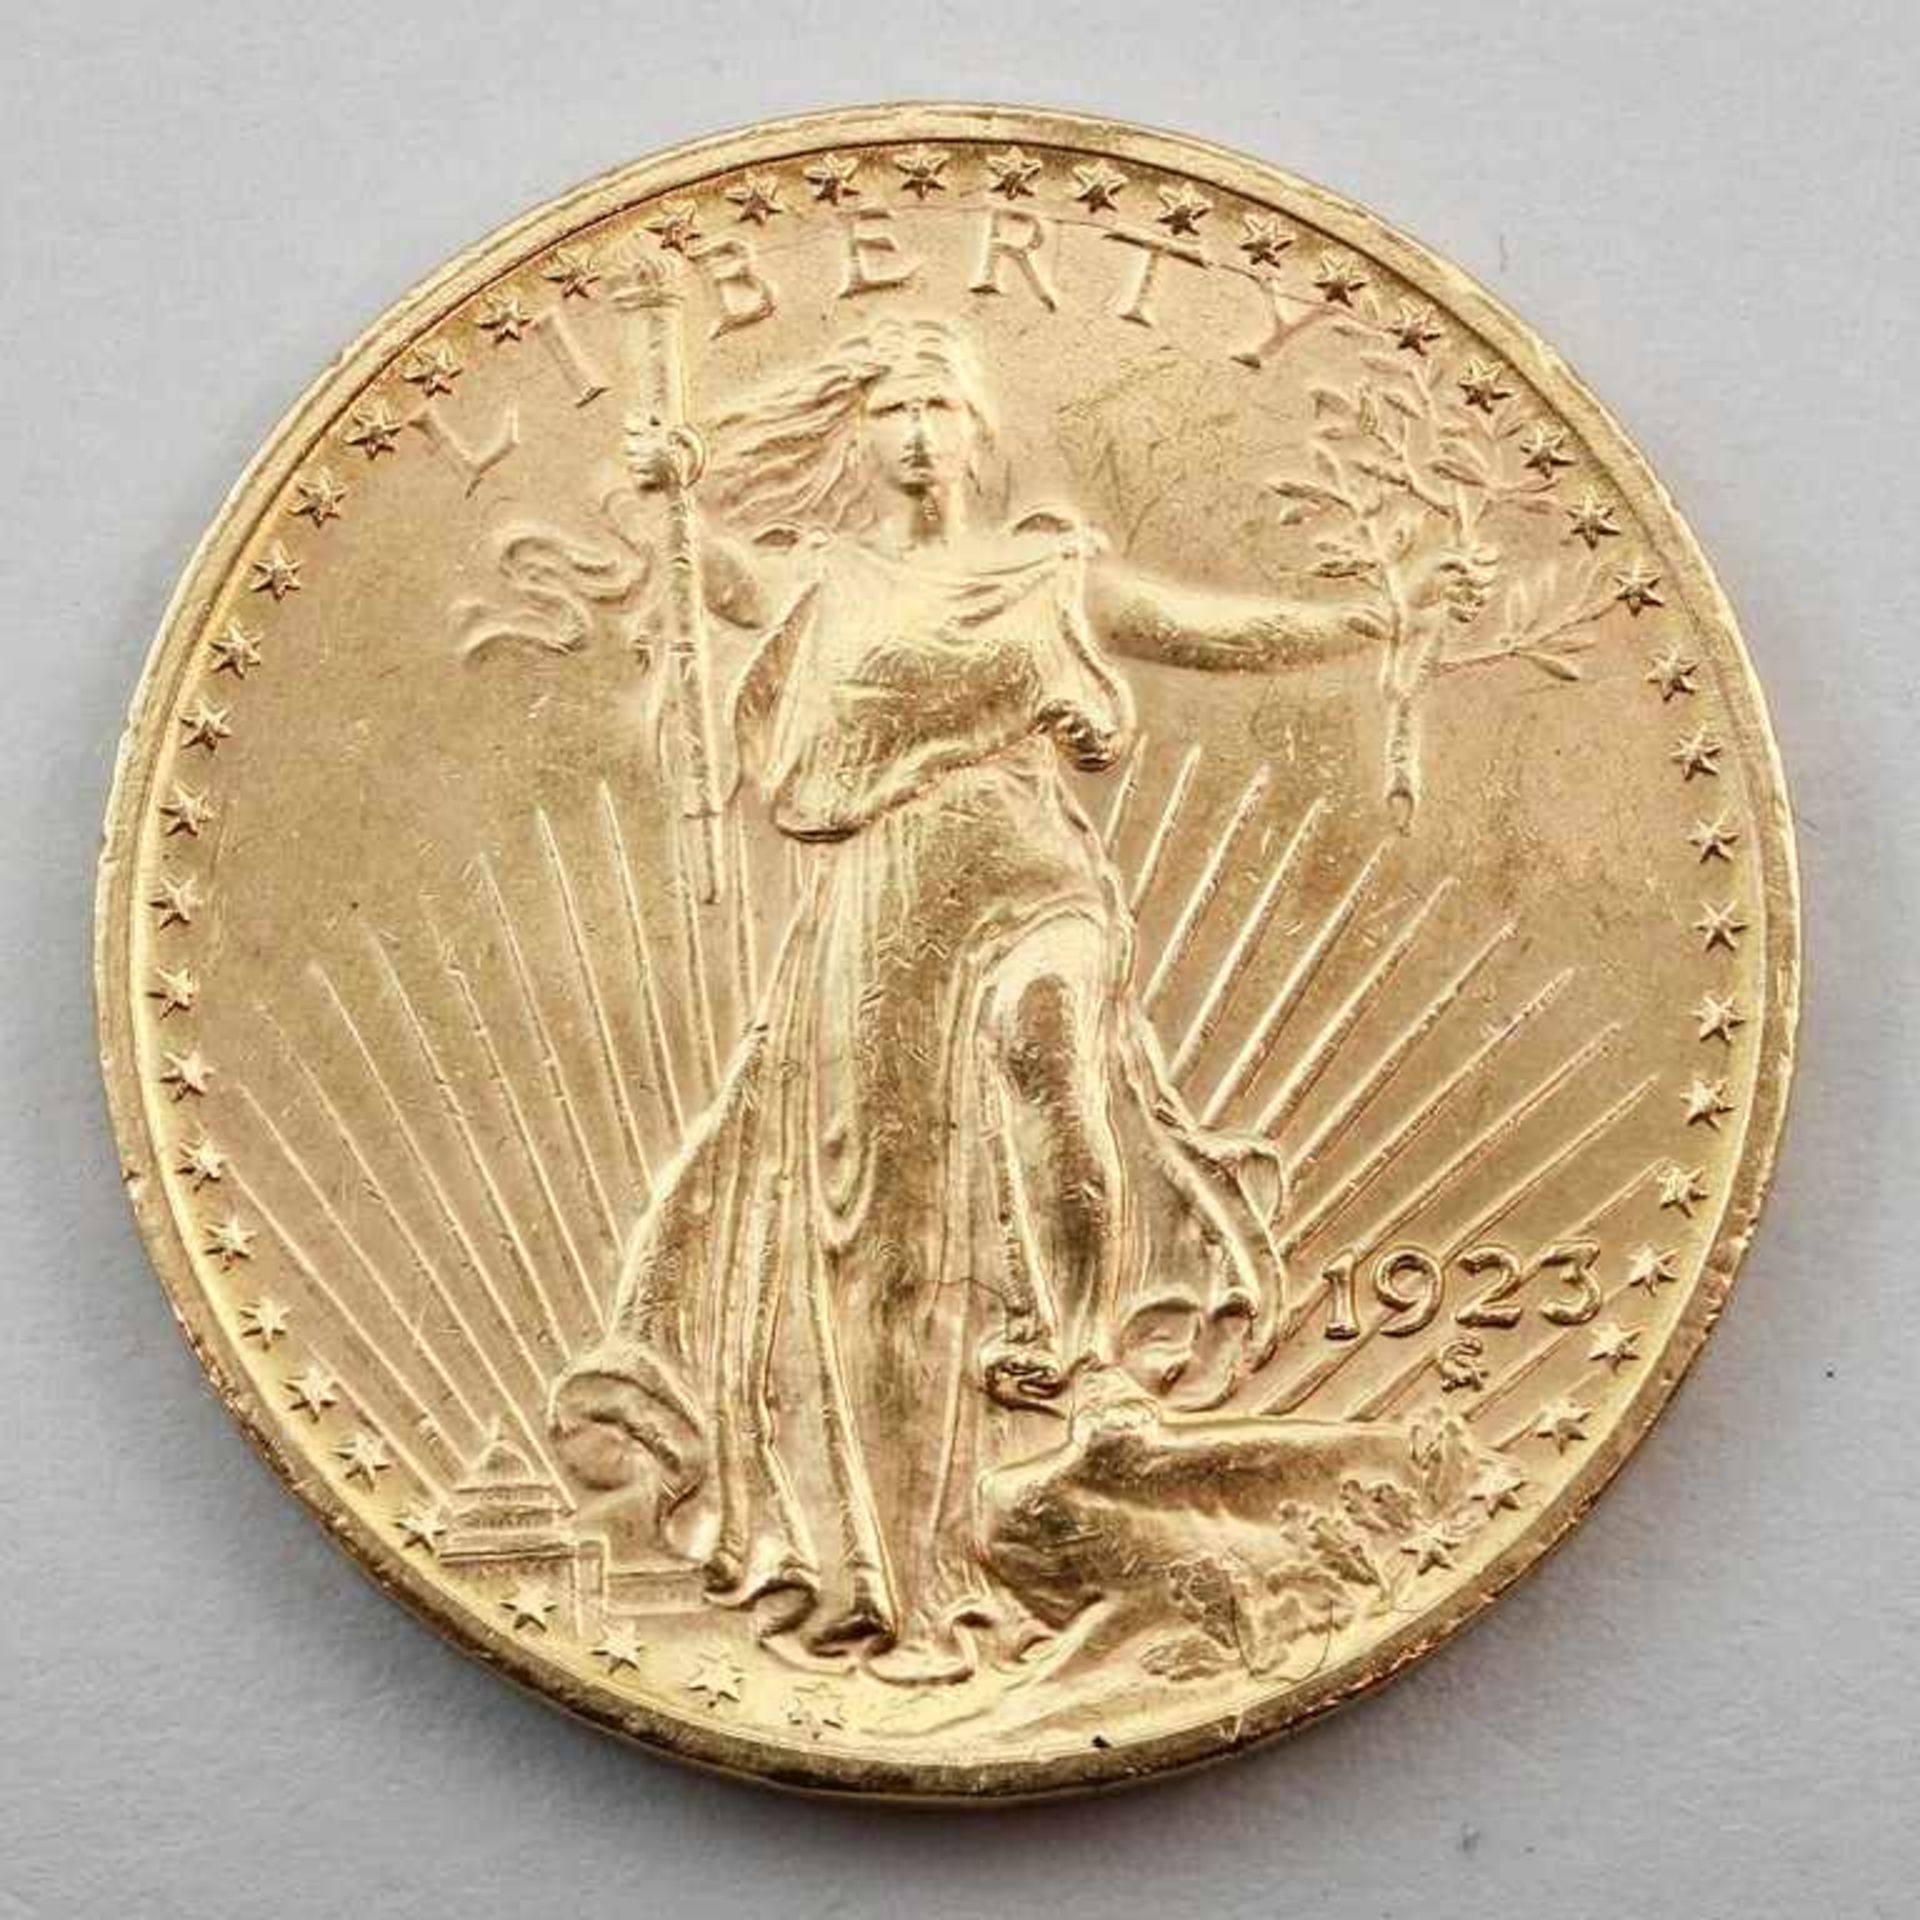 Goldmünze, USA 20 Dollar 1923 St. Gaudens.< - Bild 2 aus 2